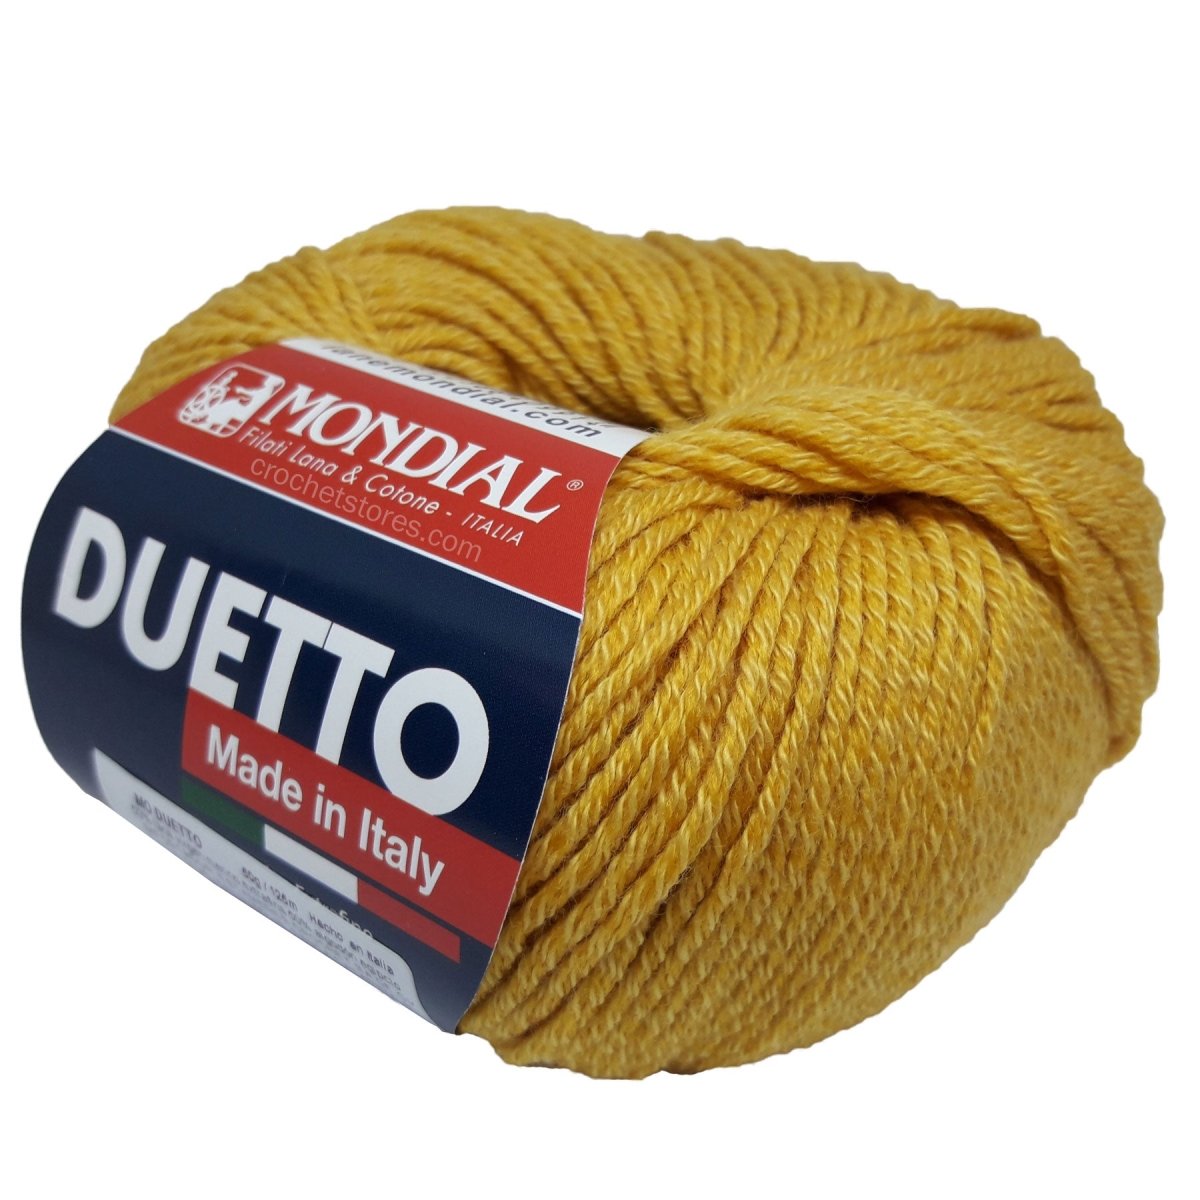 DUETTO - Crochetstores1175-2858020586409914